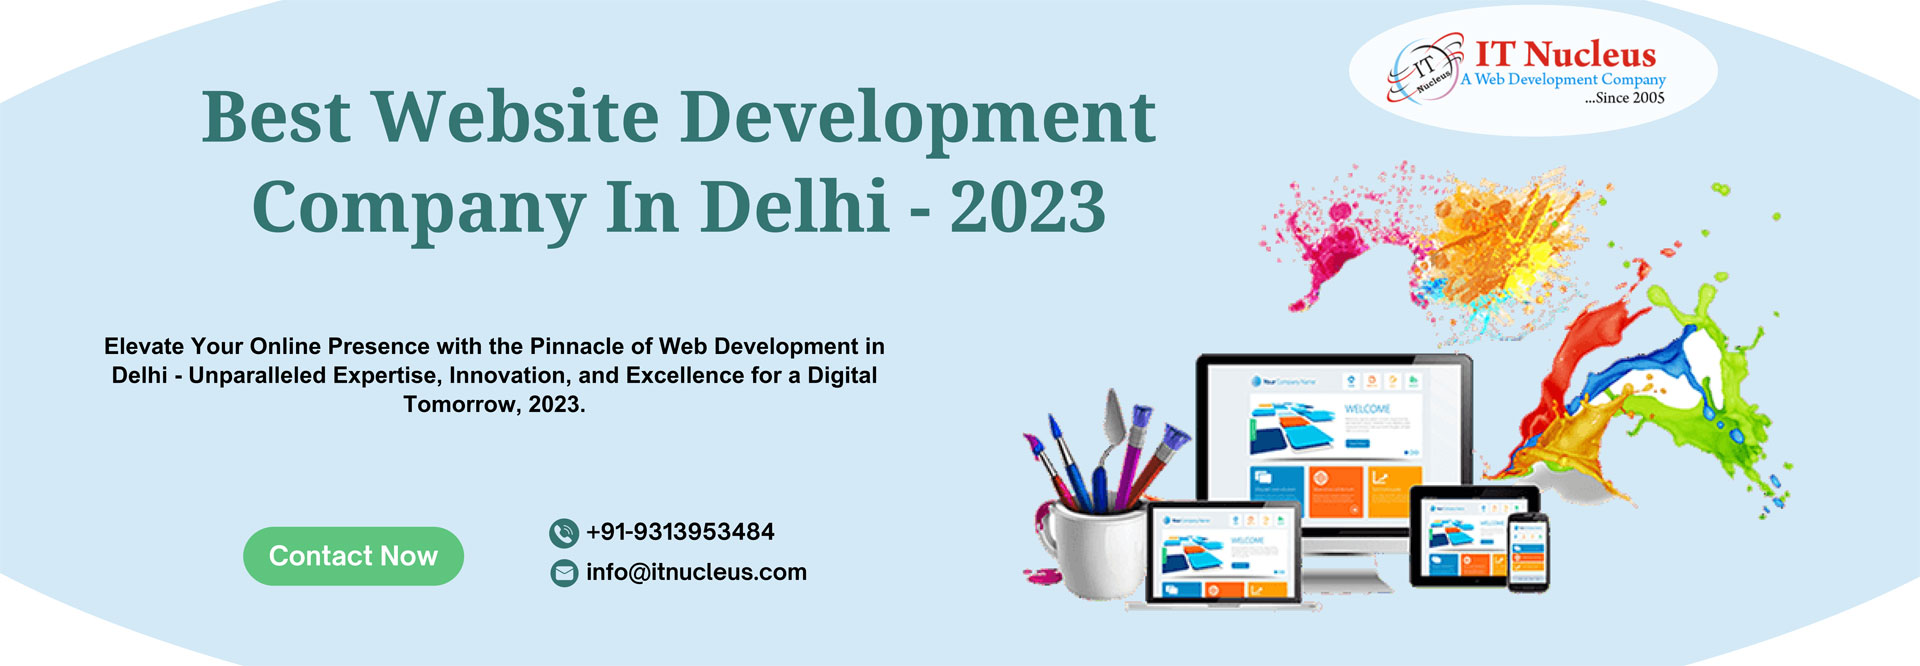 Best Website Development Company In Delhi - 2023